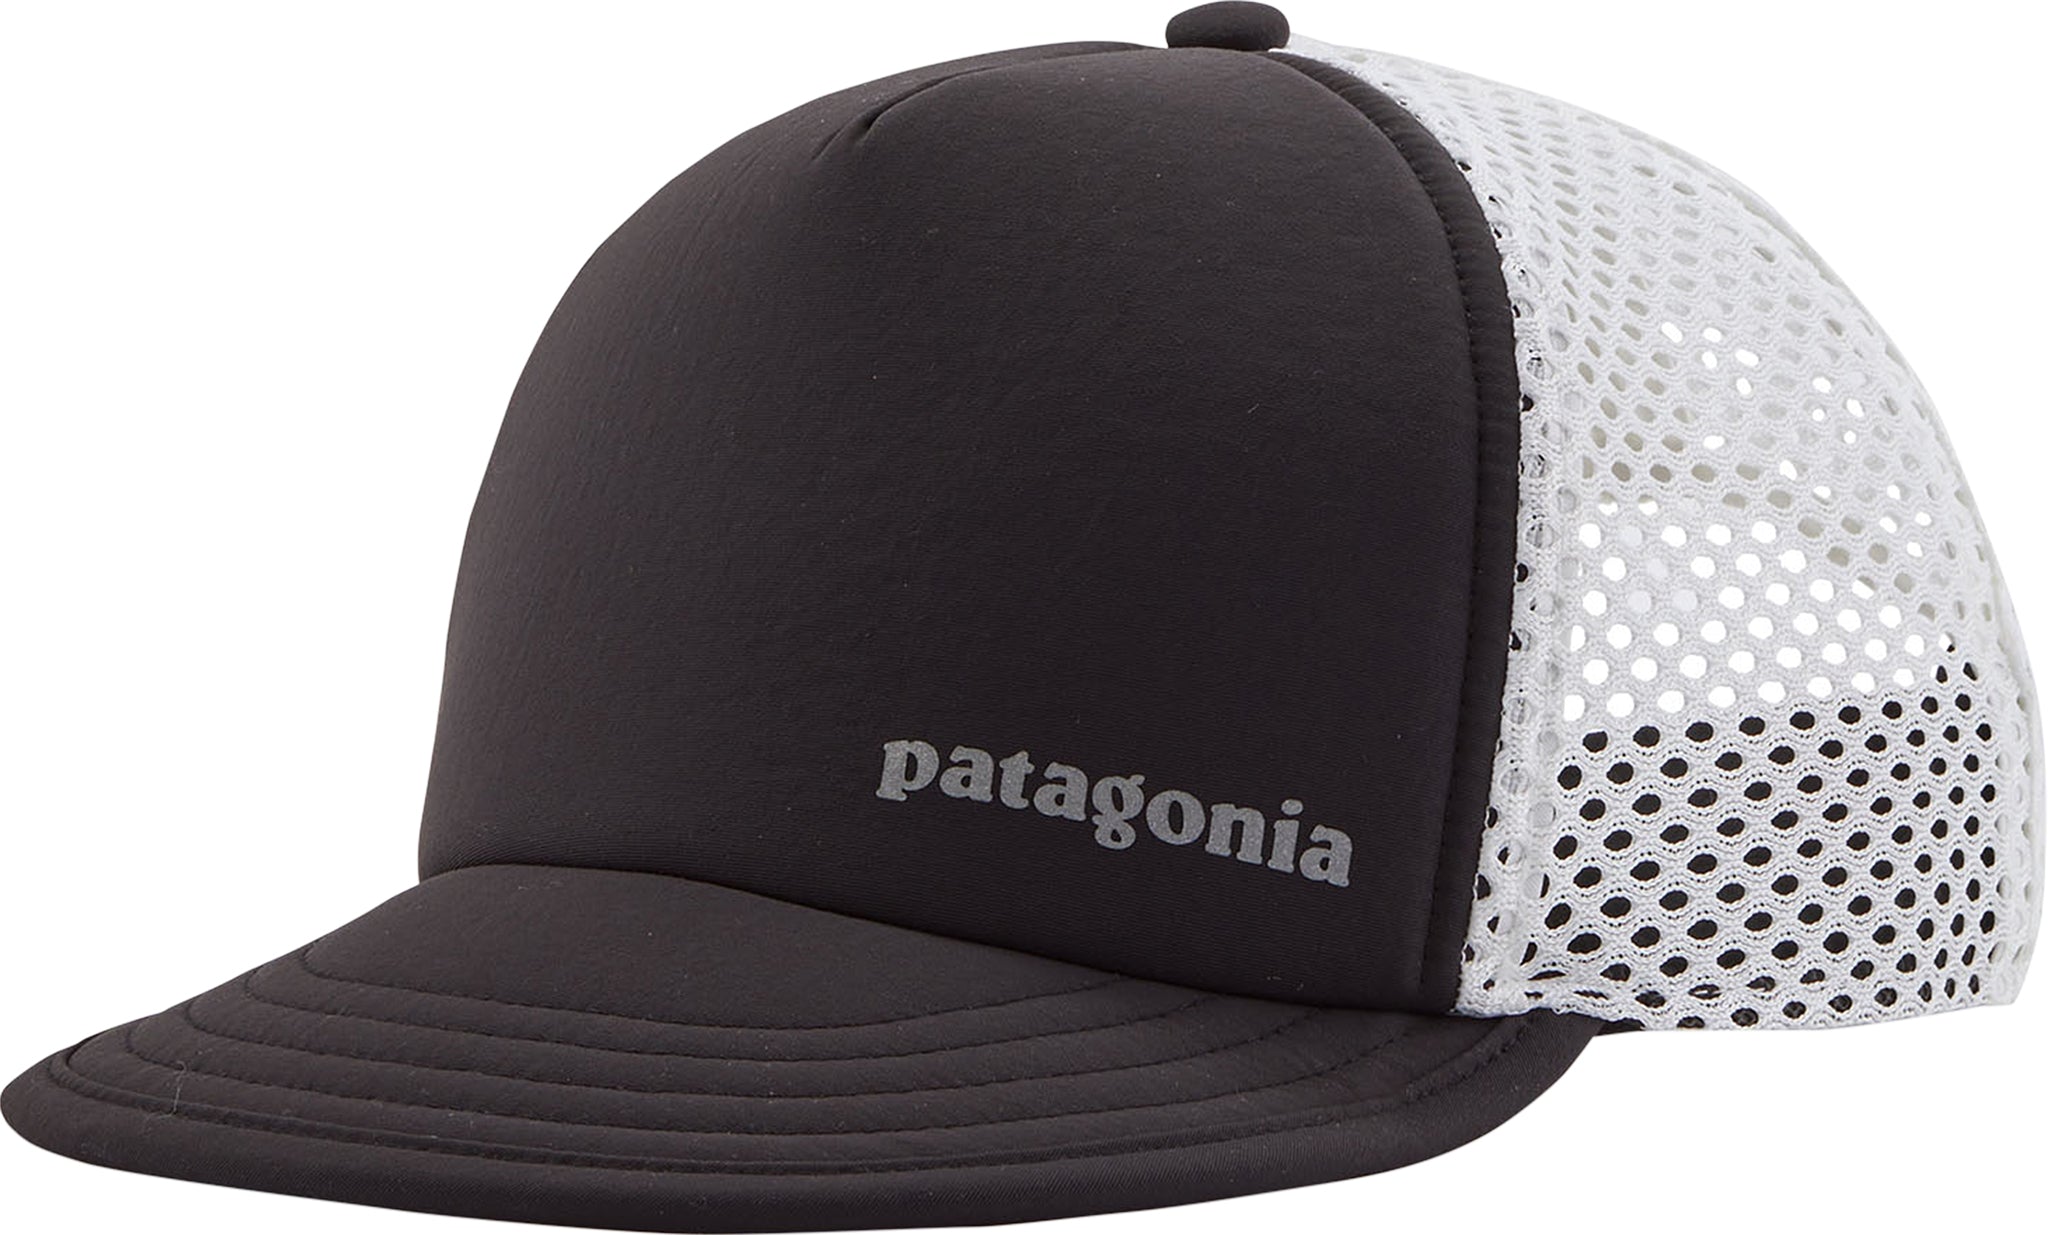 Patagonia Duckbill Shorty Trucker Hat - Black